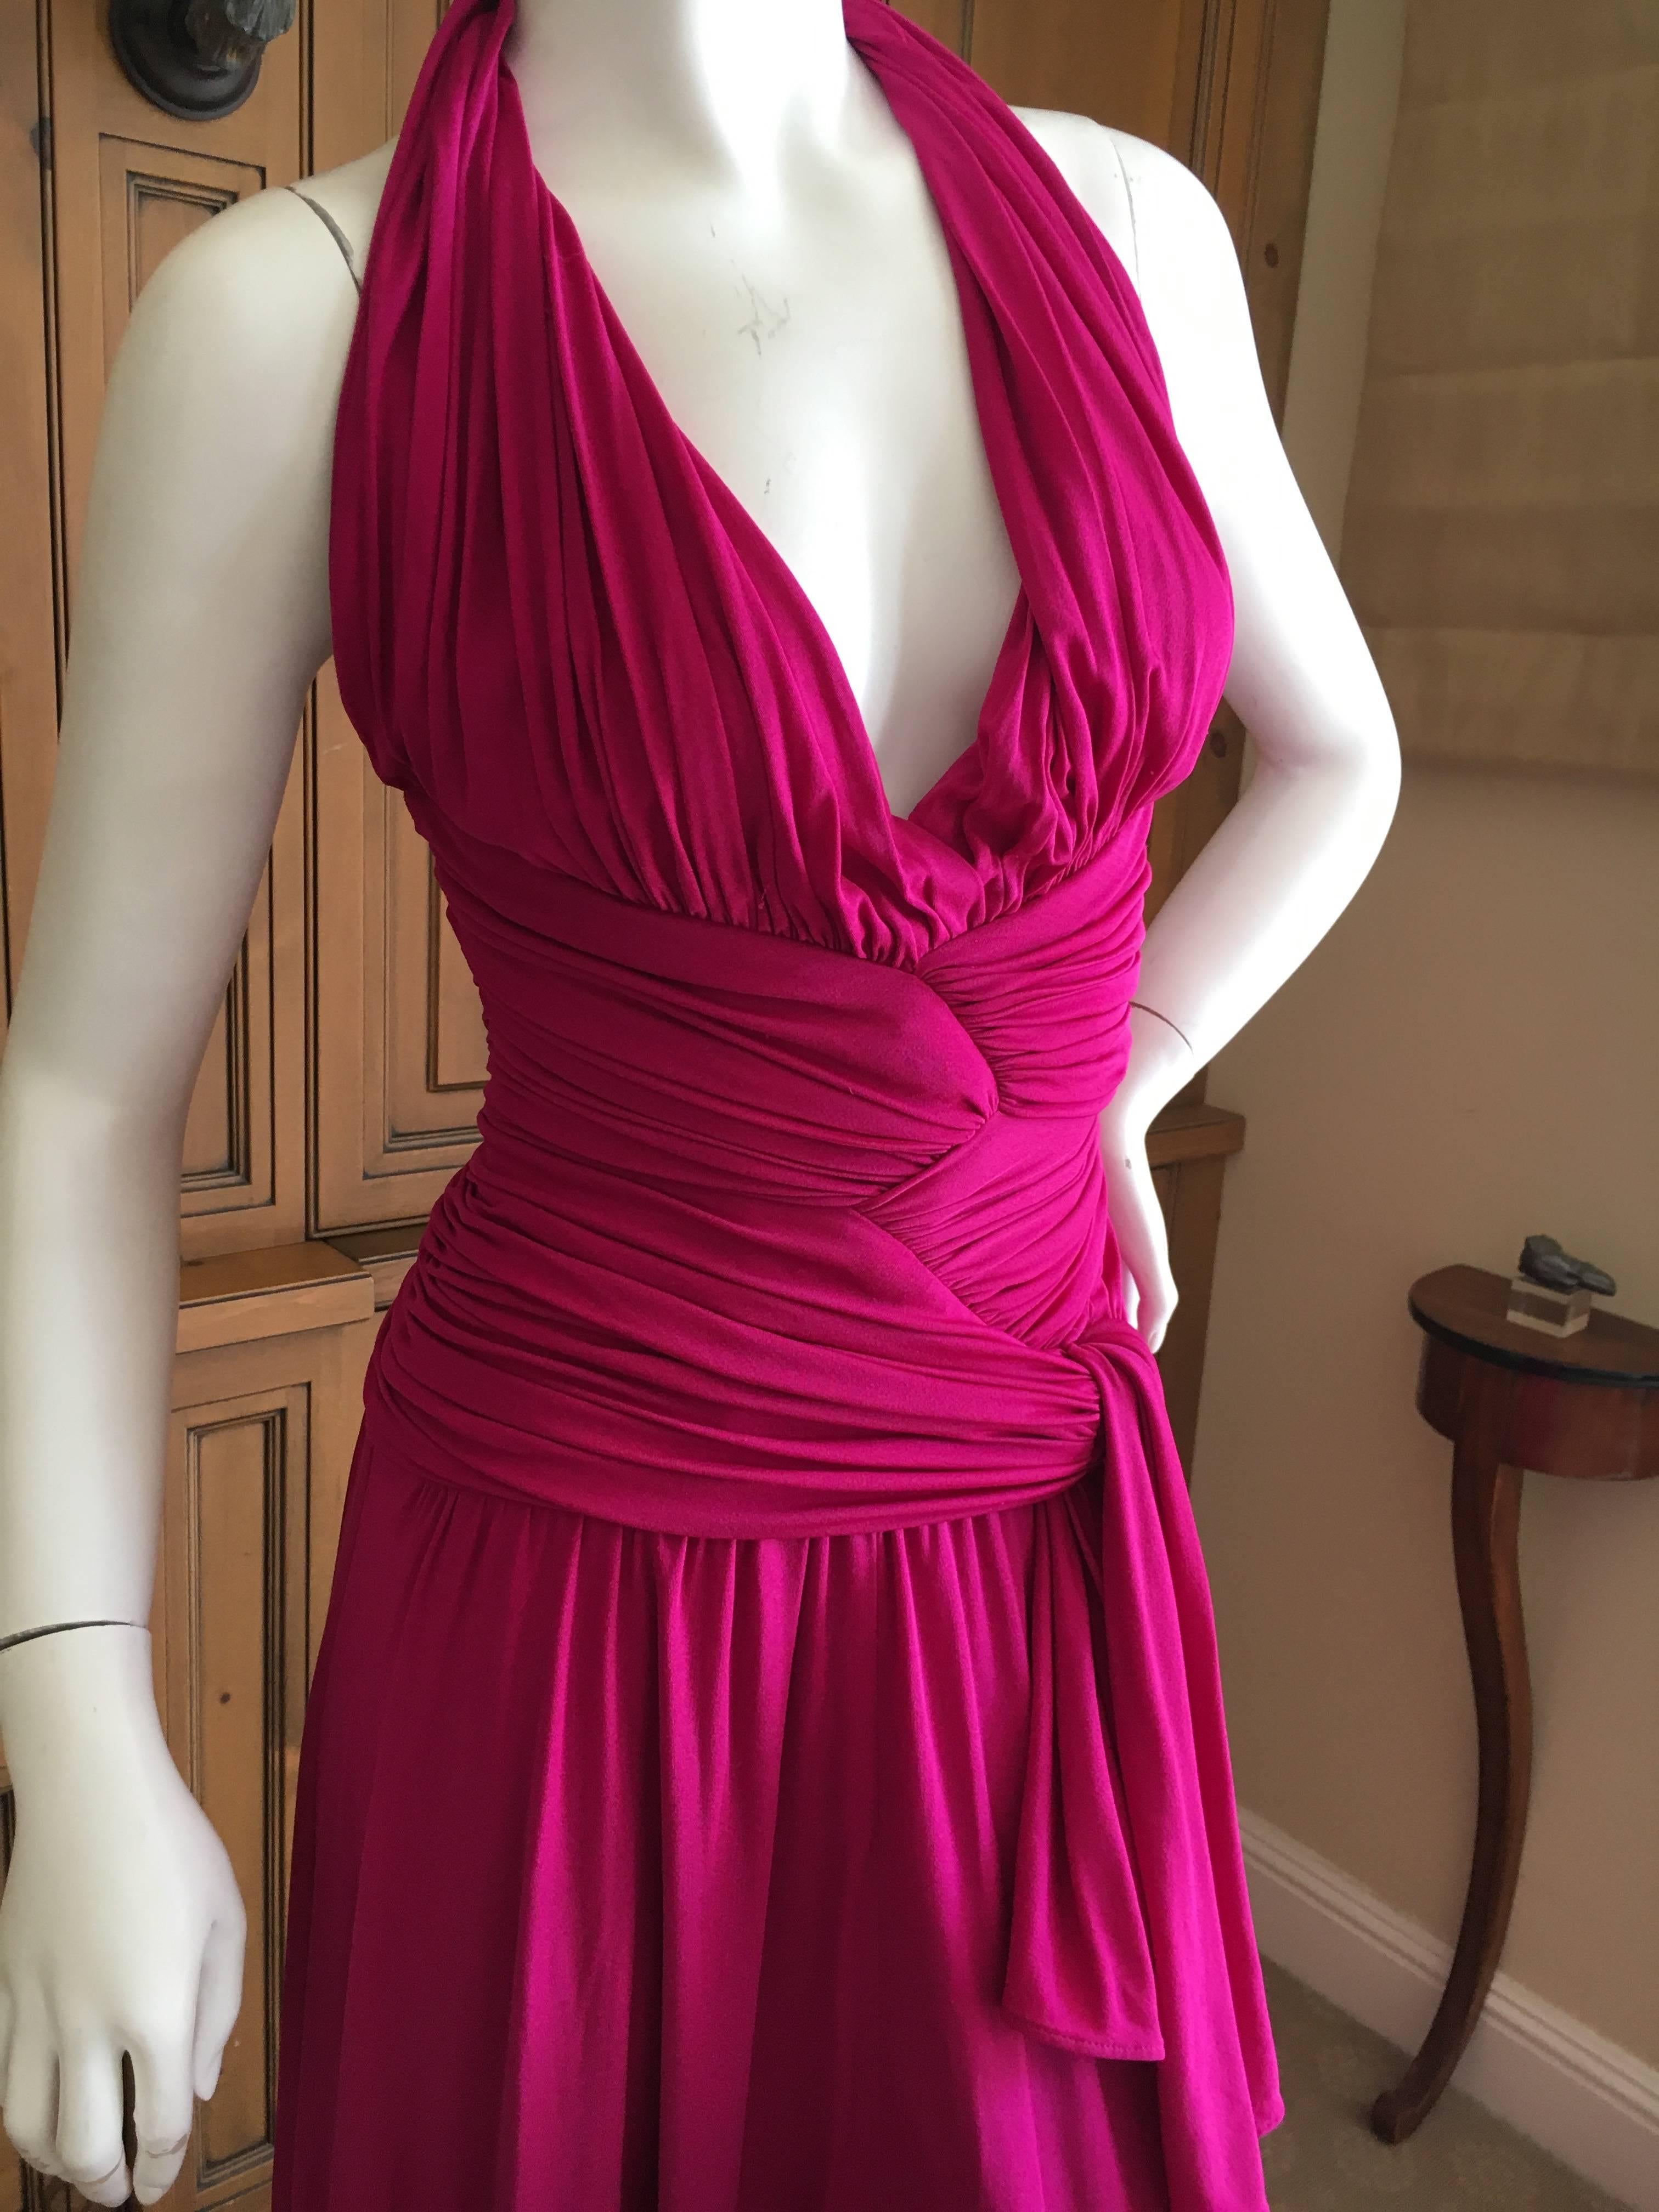 Giambattista Valli Fuchsia Low Cut Halter Dress In Excellent Condition For Sale In Cloverdale, CA